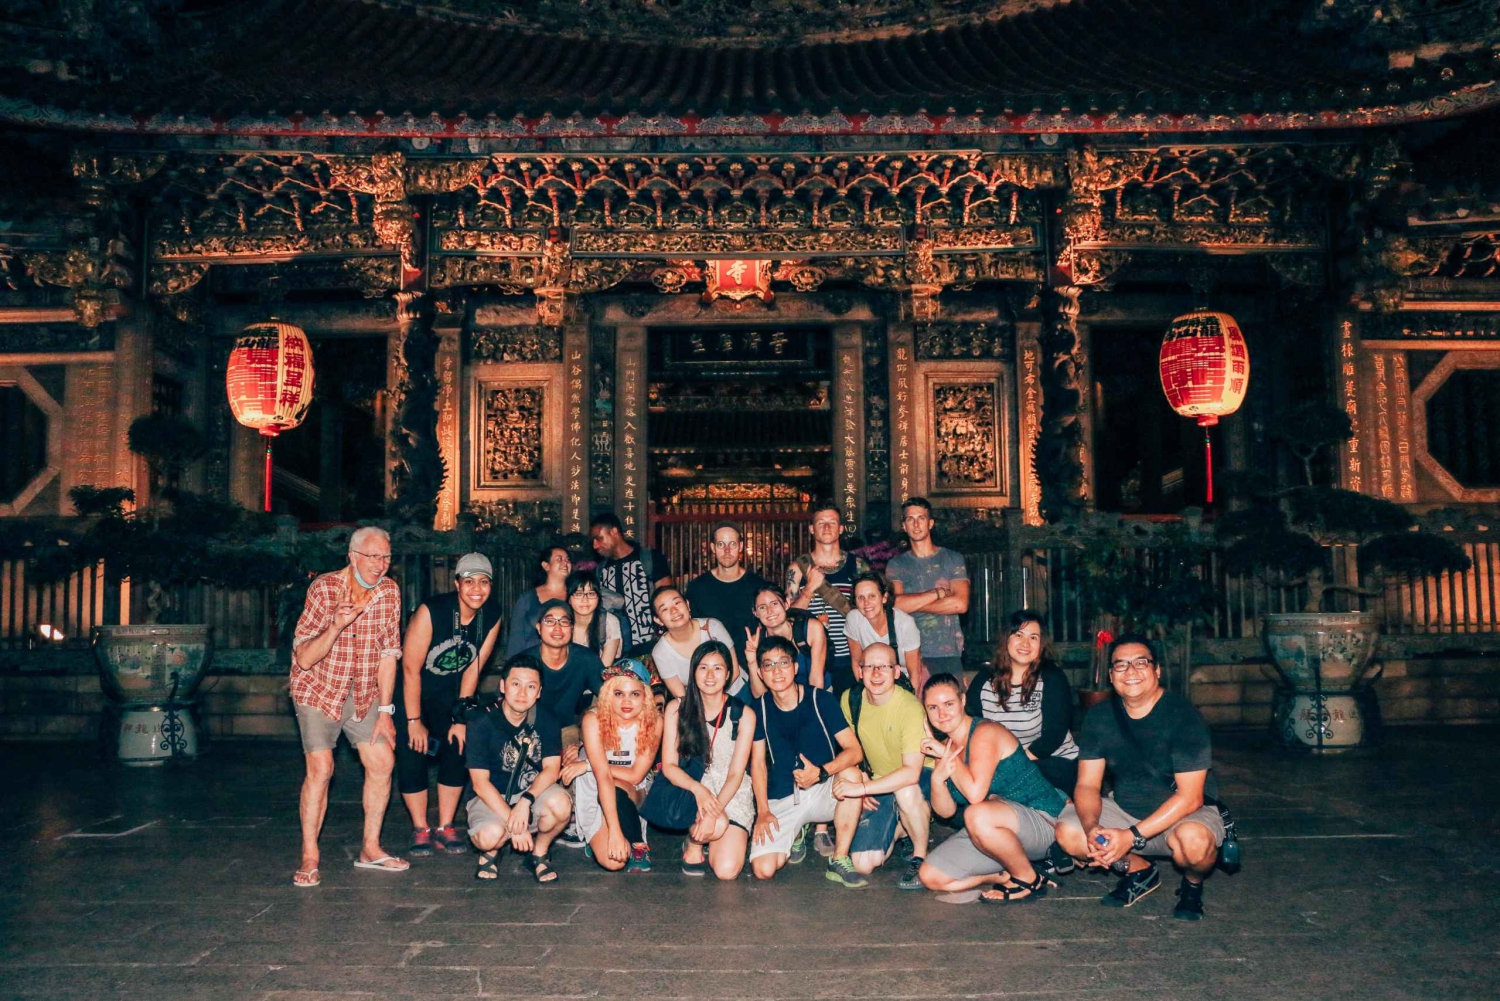 Taipeis ursprung och Longshan-templet - Taiwan Cultural Tour